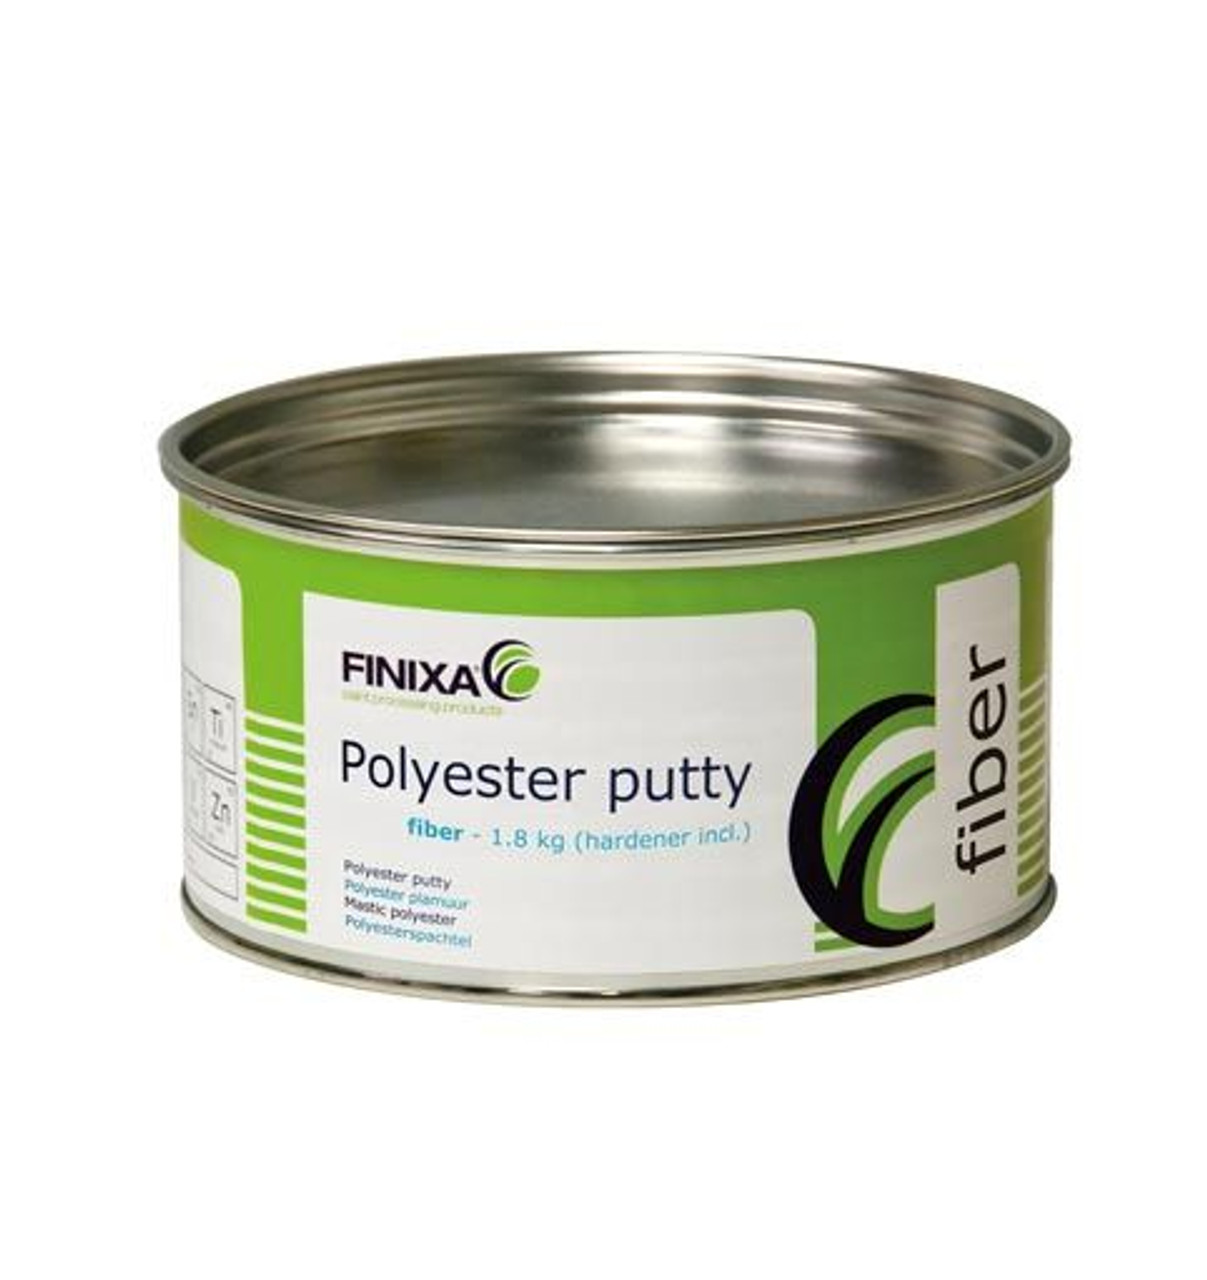 Finixa Fibre Polyester Putty 1.8kg